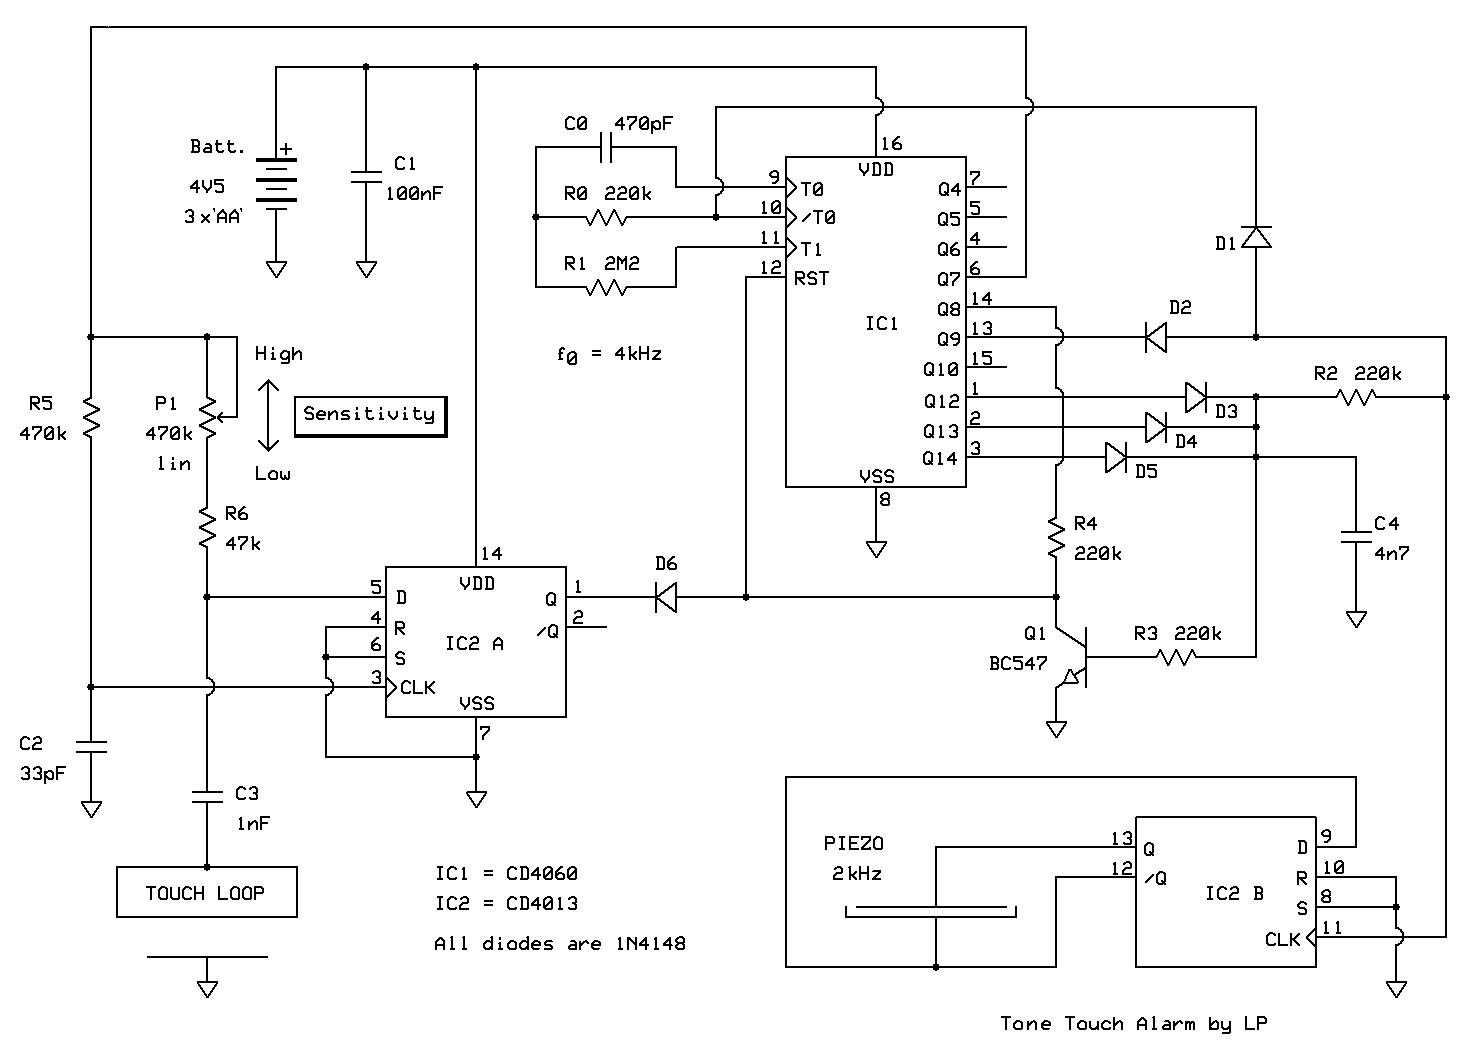 Tone touch alarm by LP circuit diagram